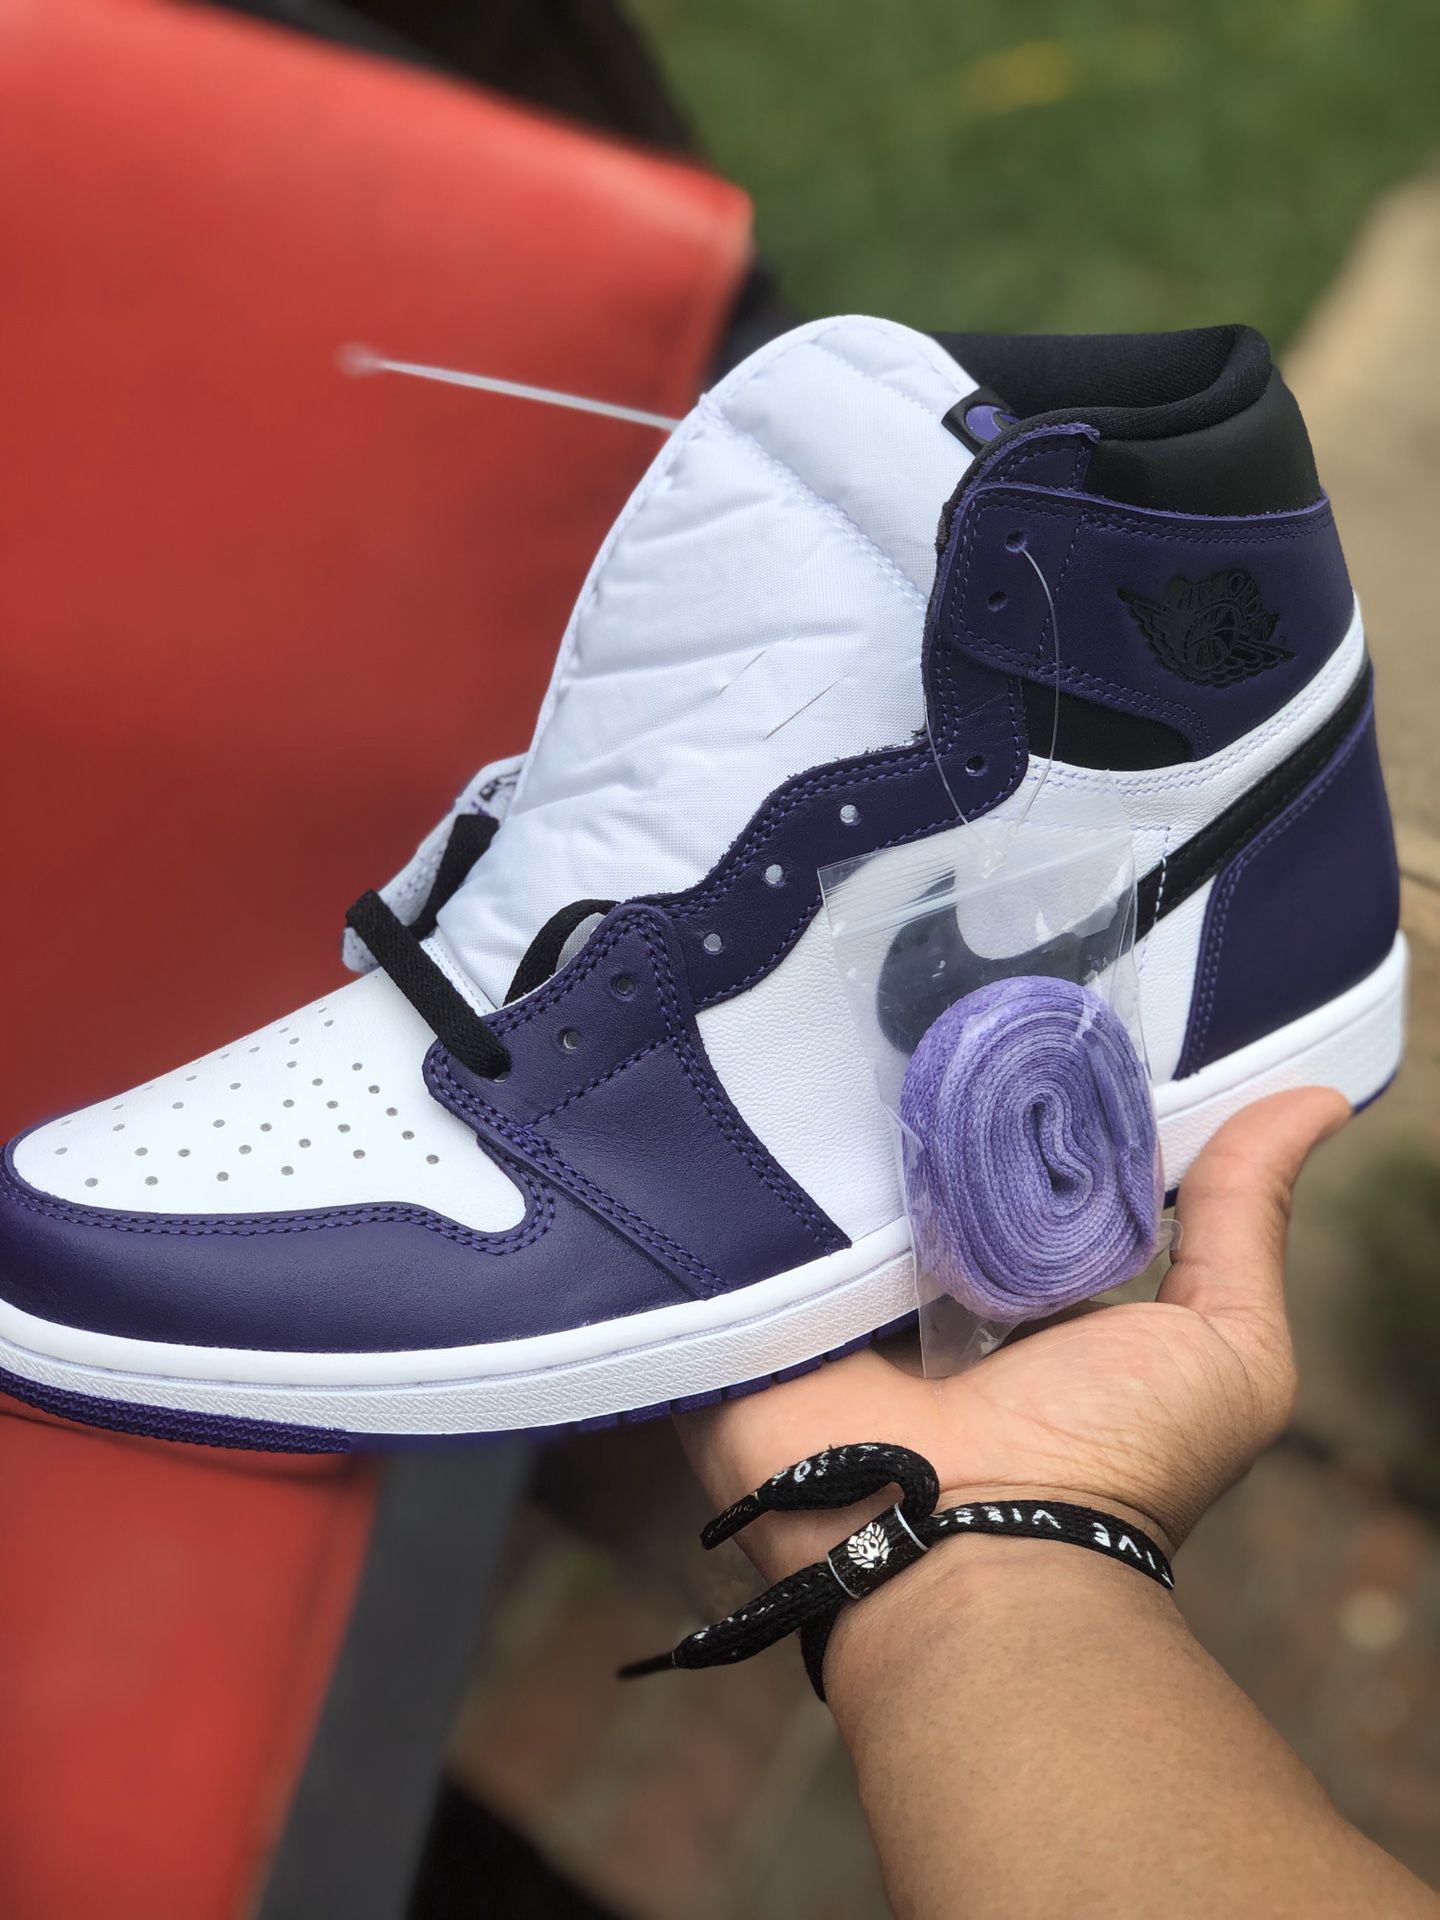 Jordan 1 “Court Purple”